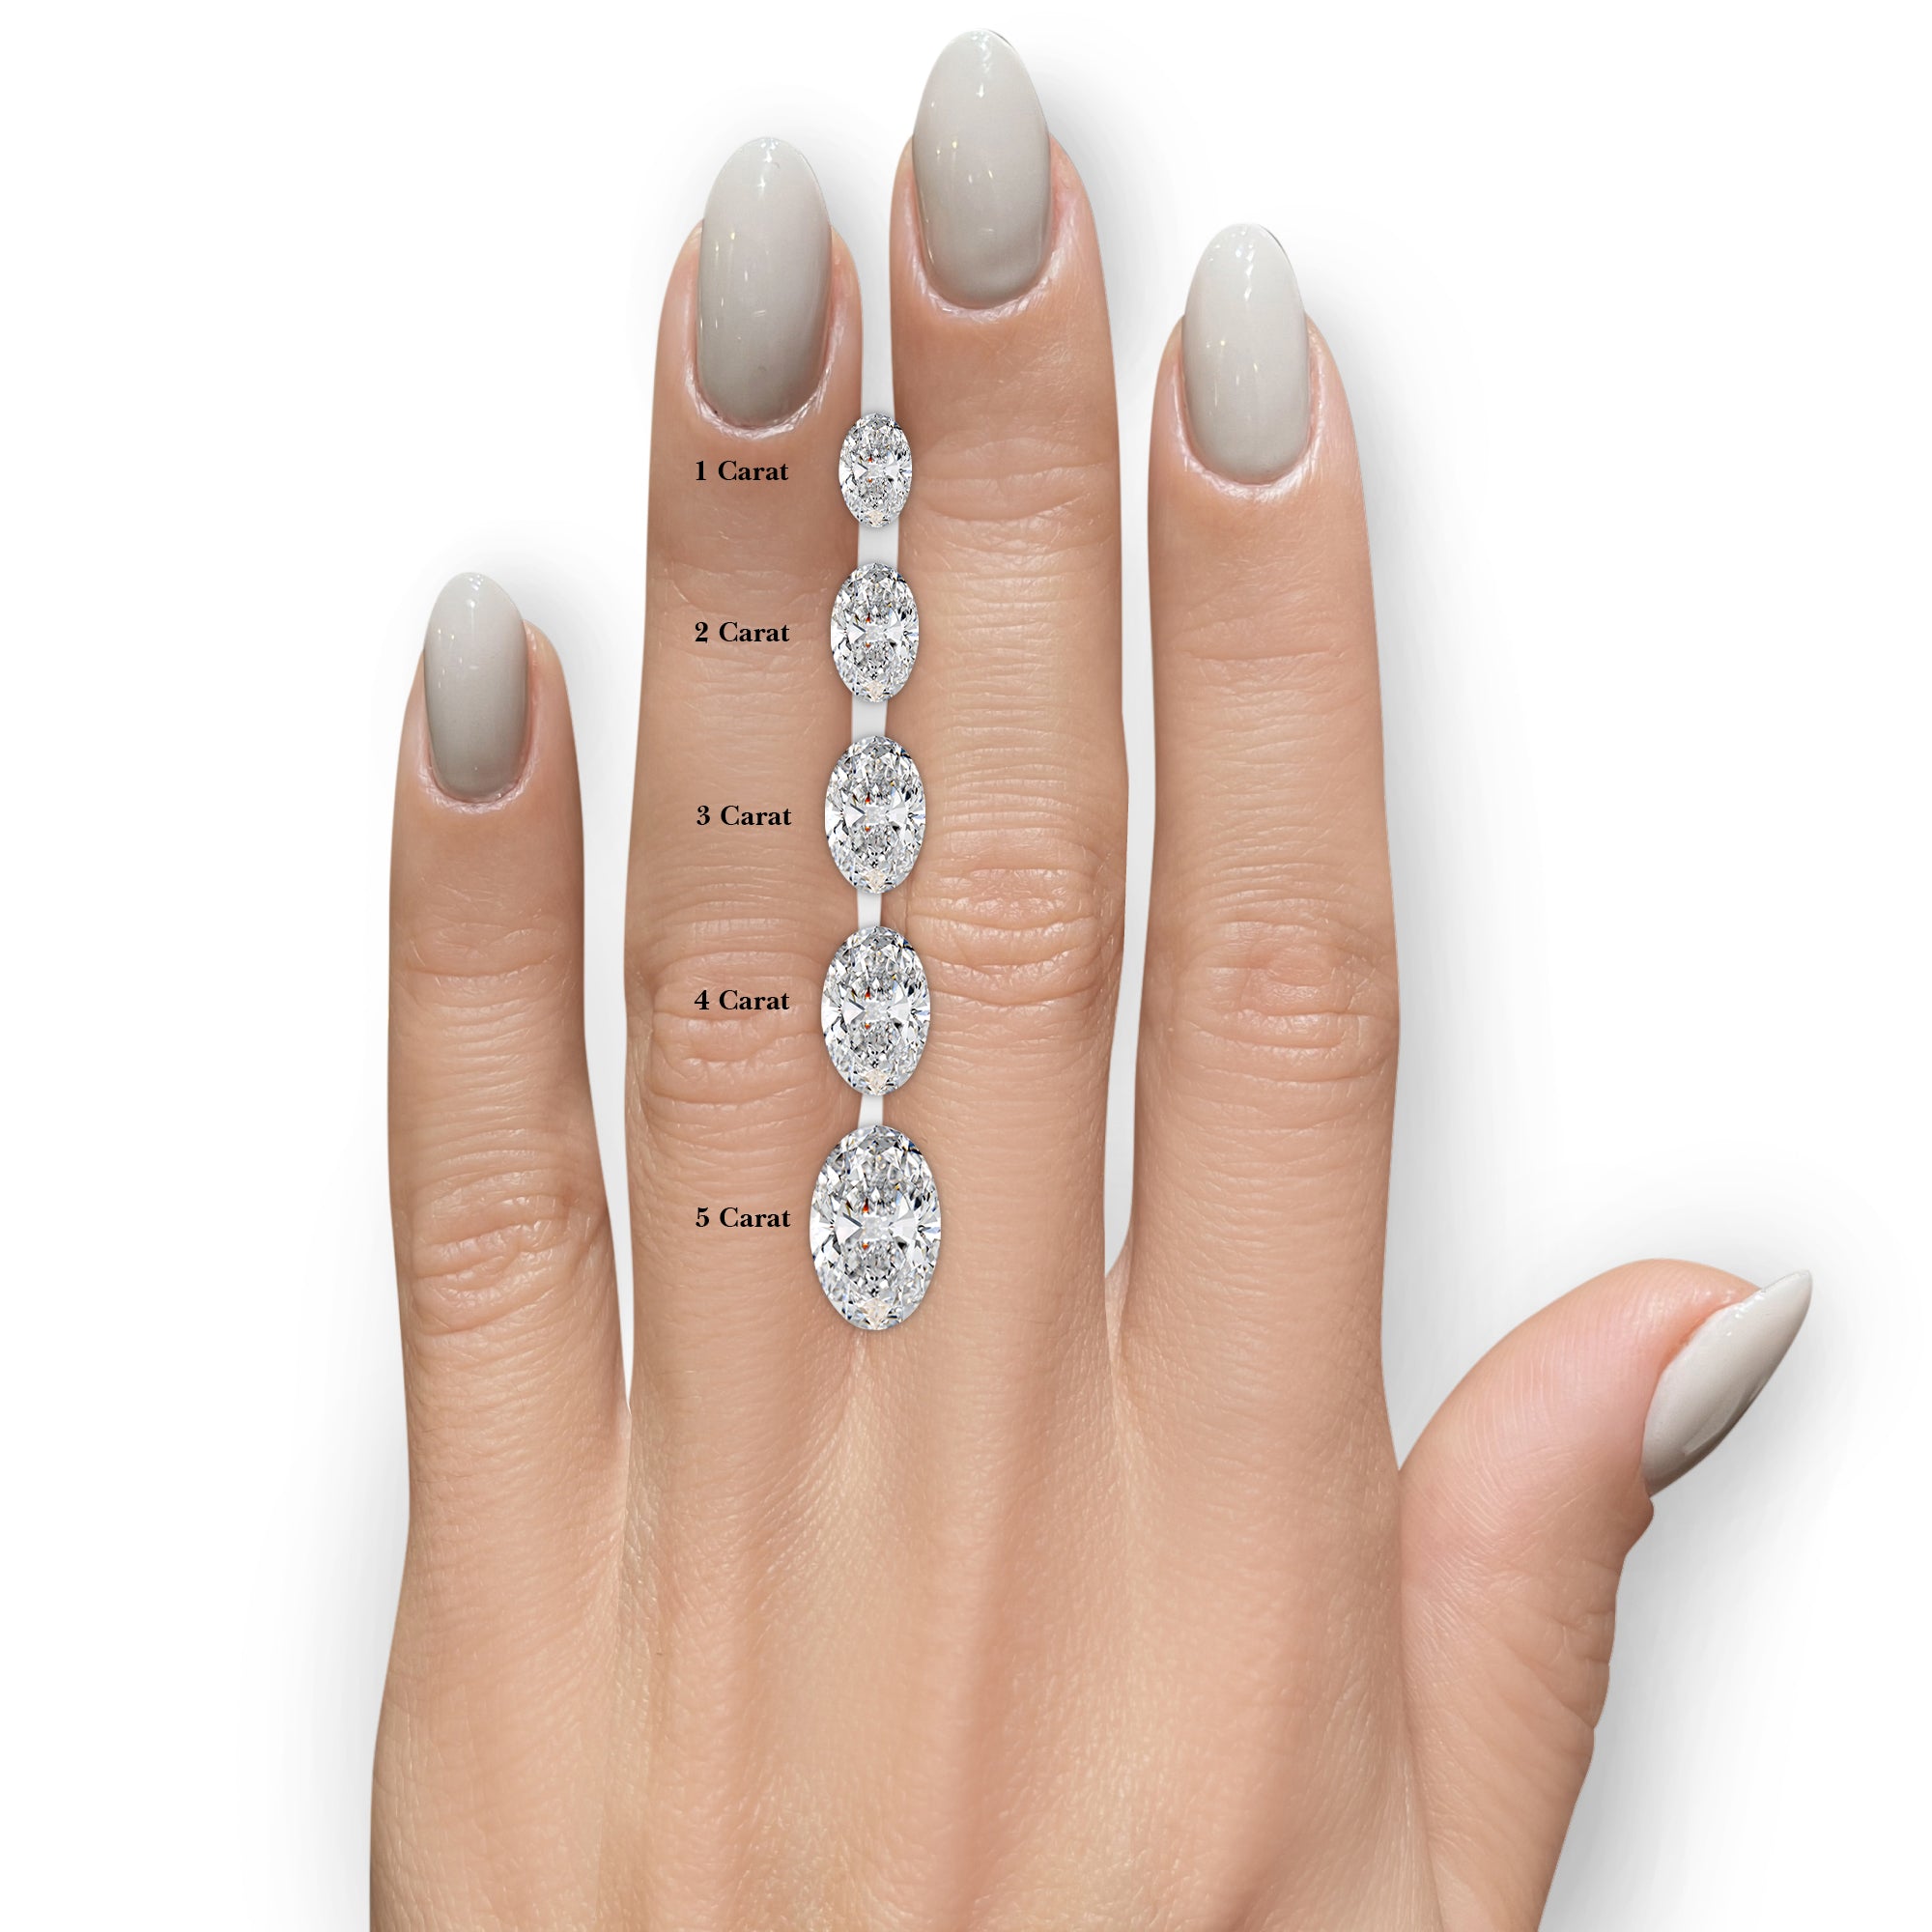 Alicia Diamond Engagement Ring -14K White Gold